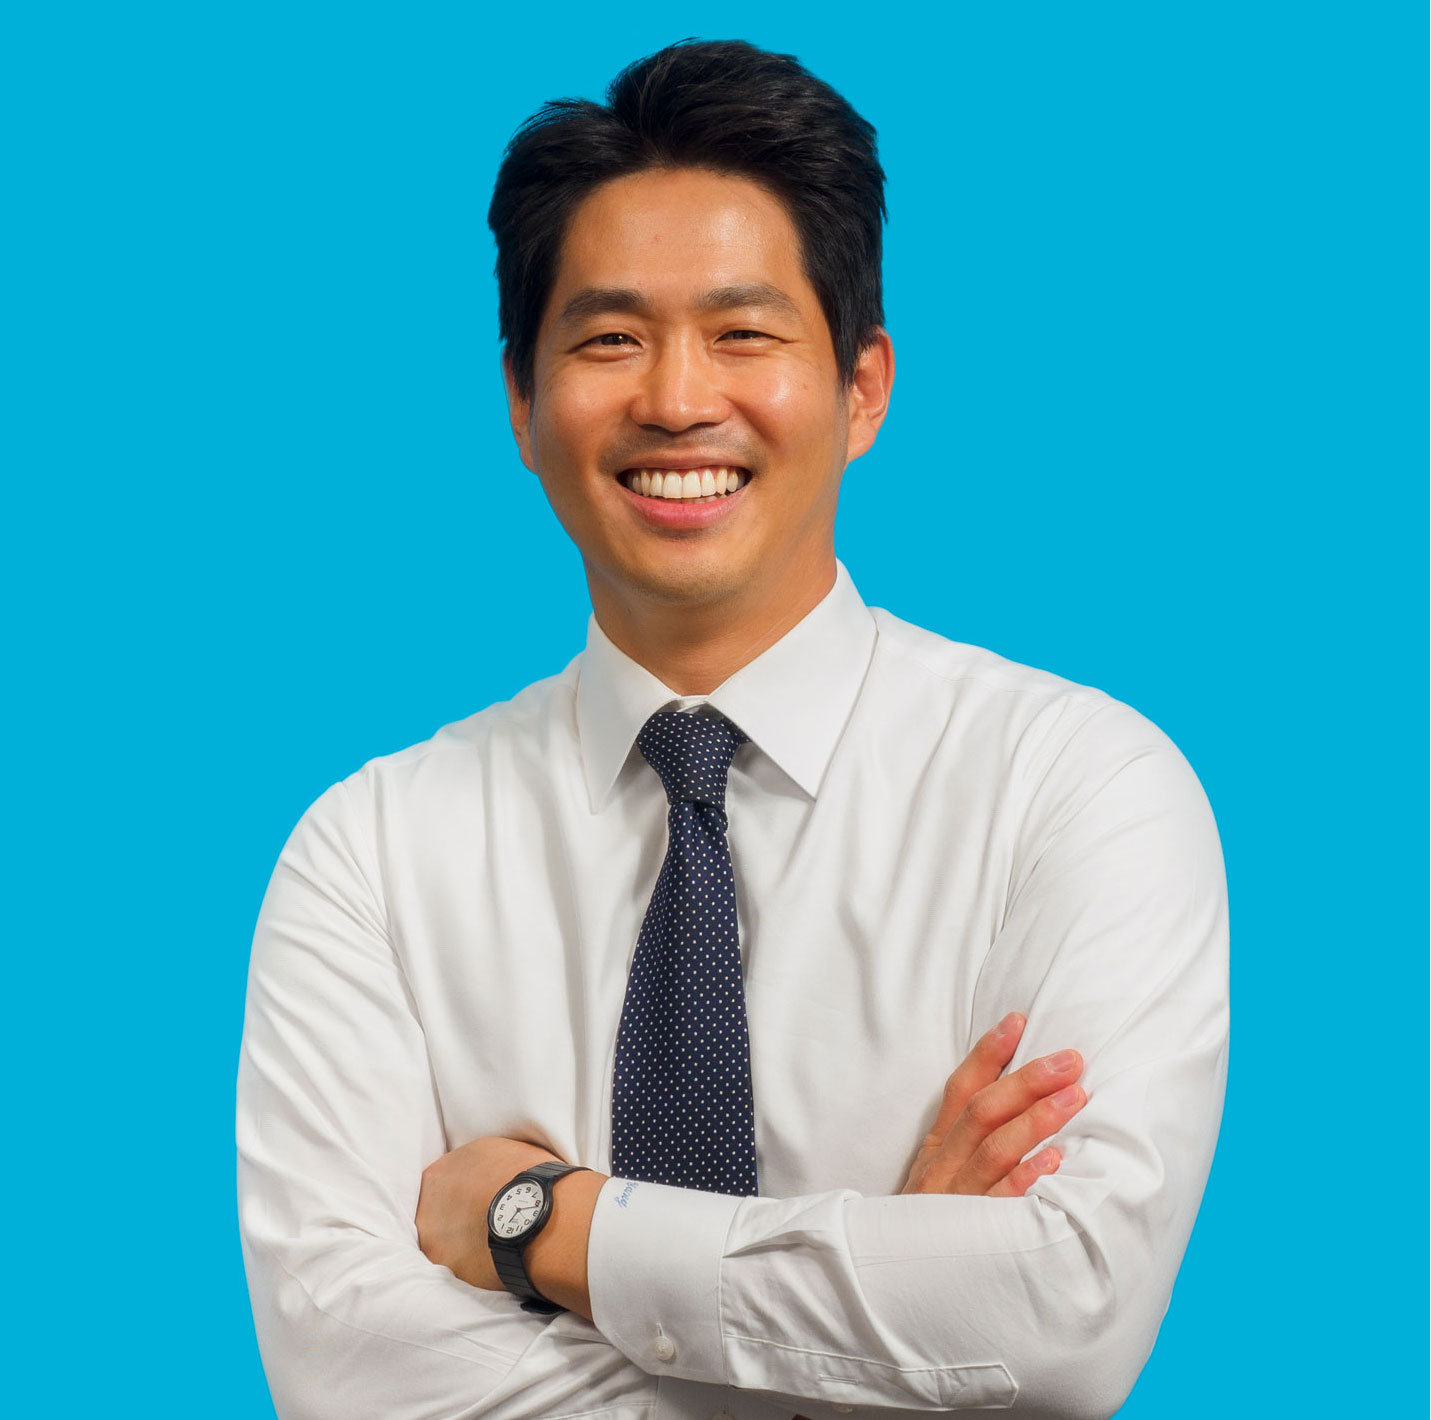 Sky Dental Endodontic Specialist, Dr. James Yang, arms folded, smiling